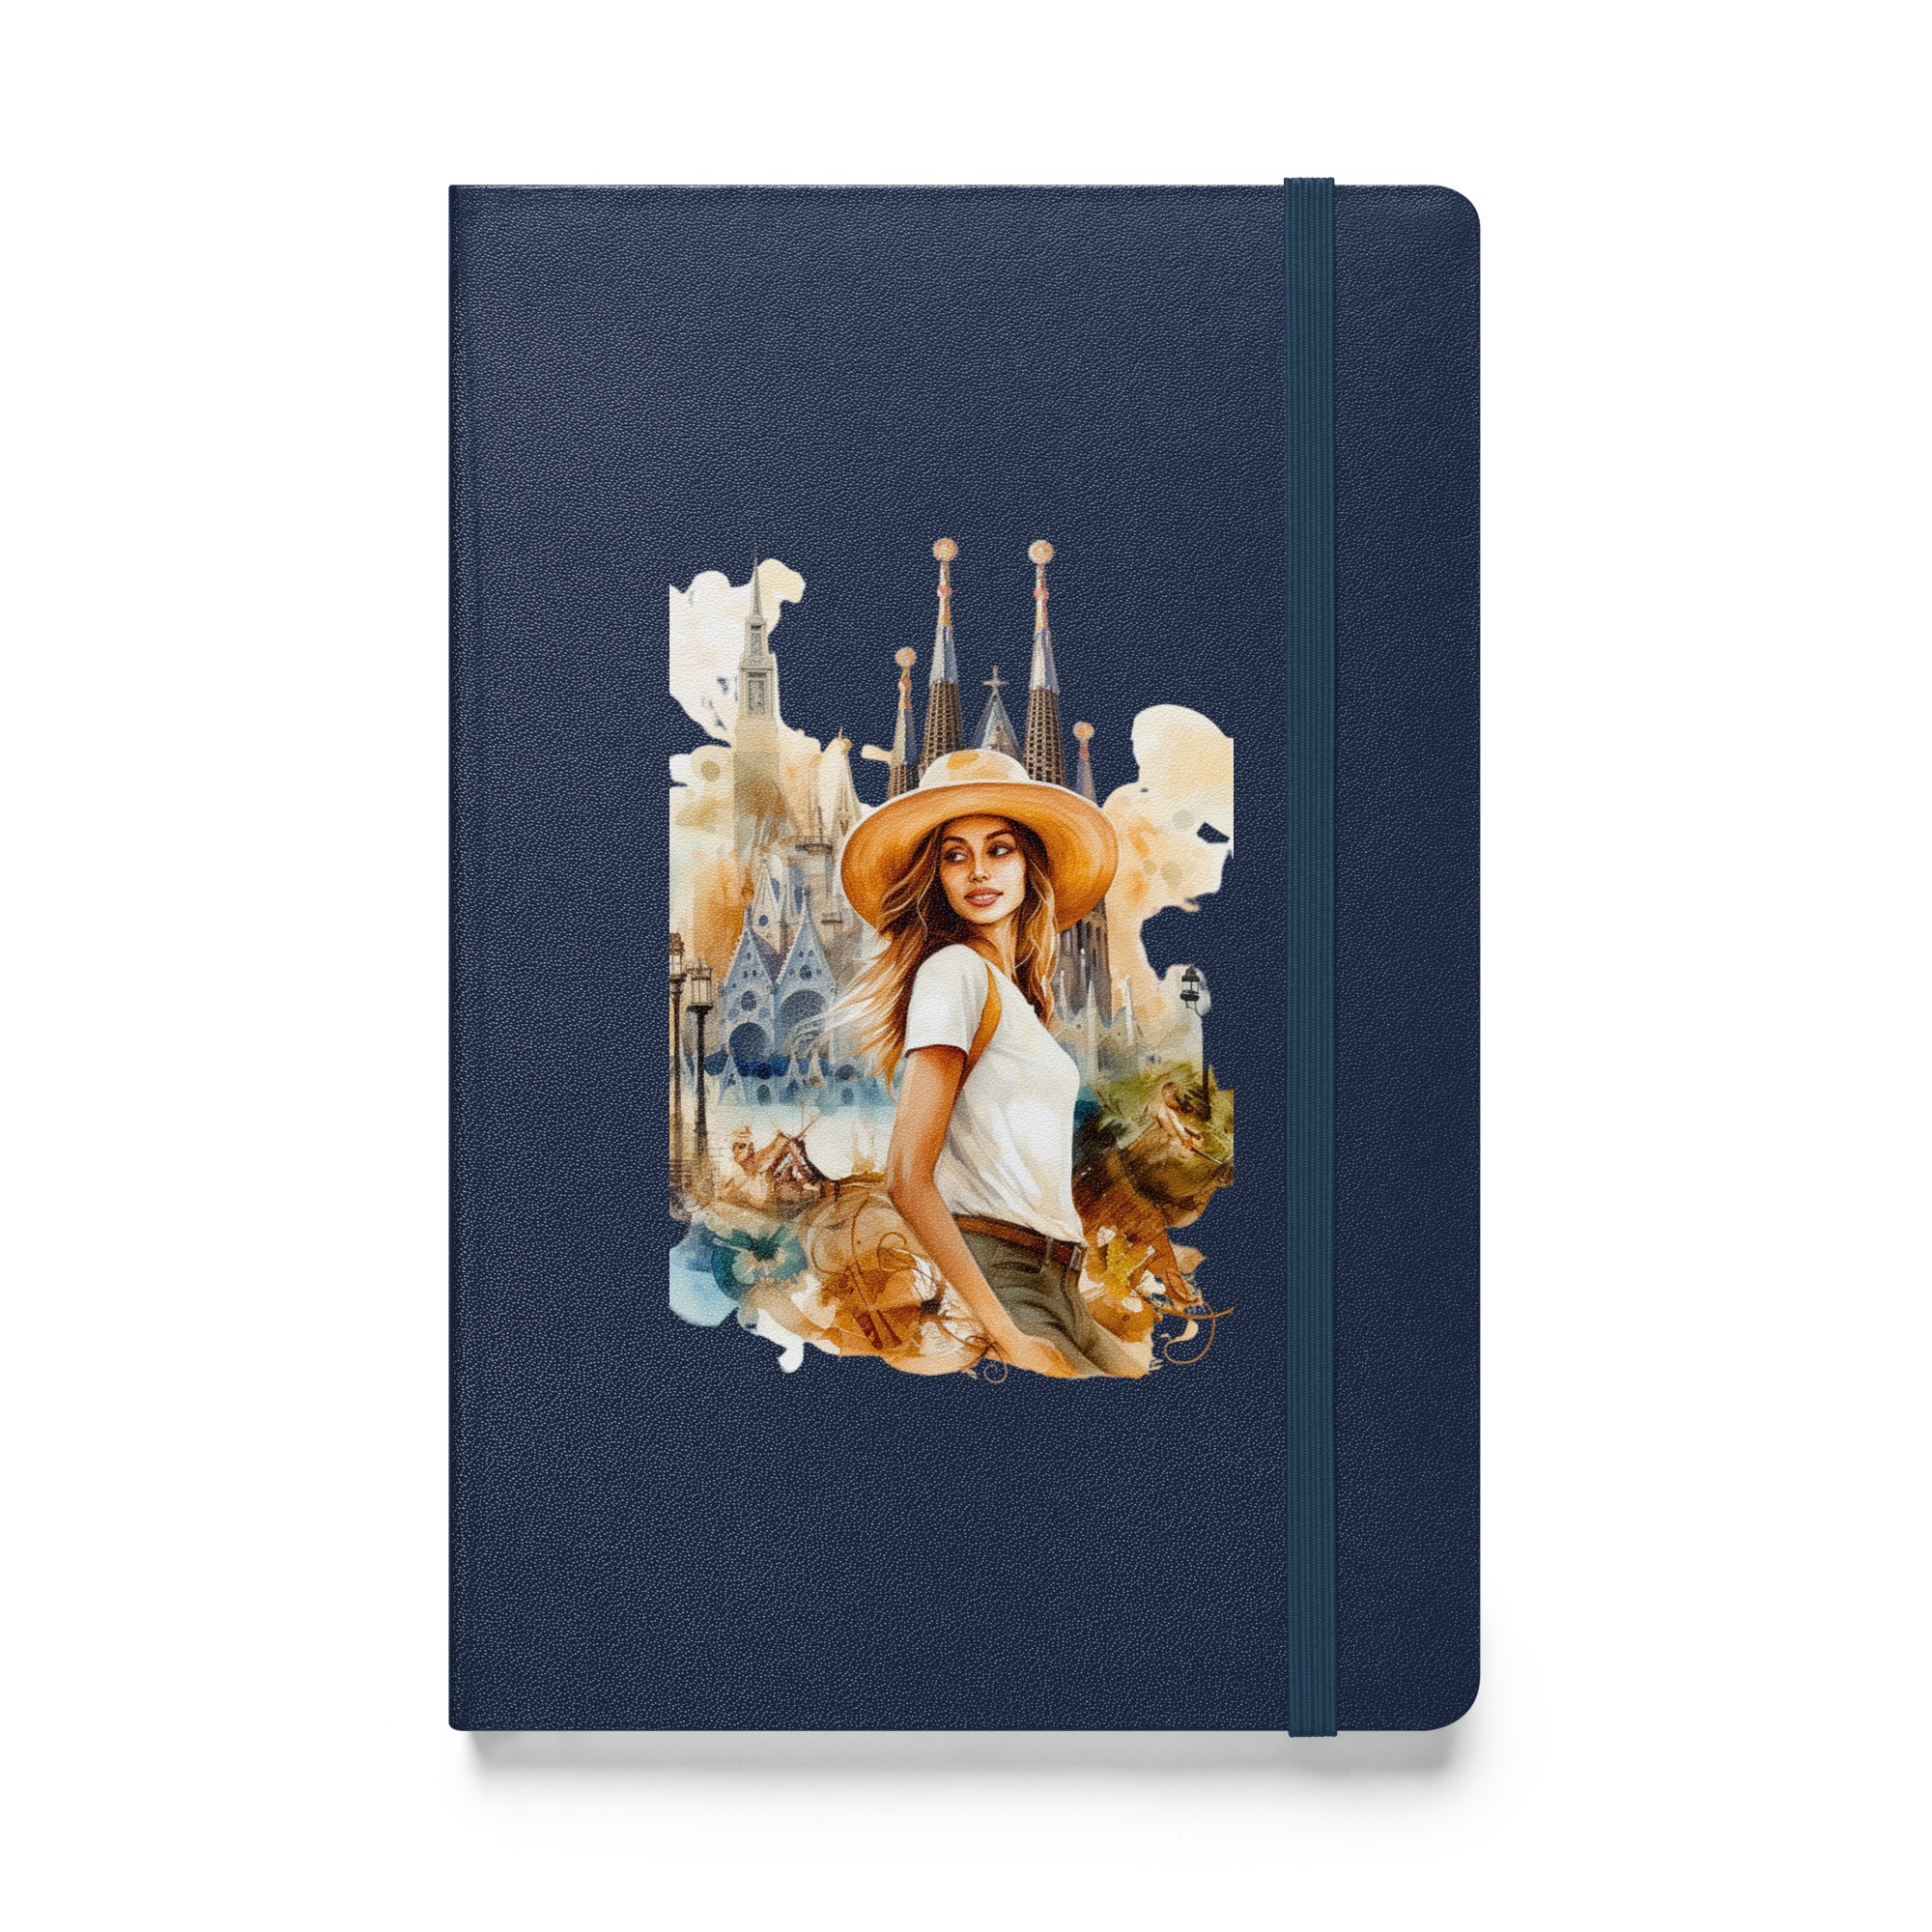 Barcelona Traveler - Hardcover Notebook